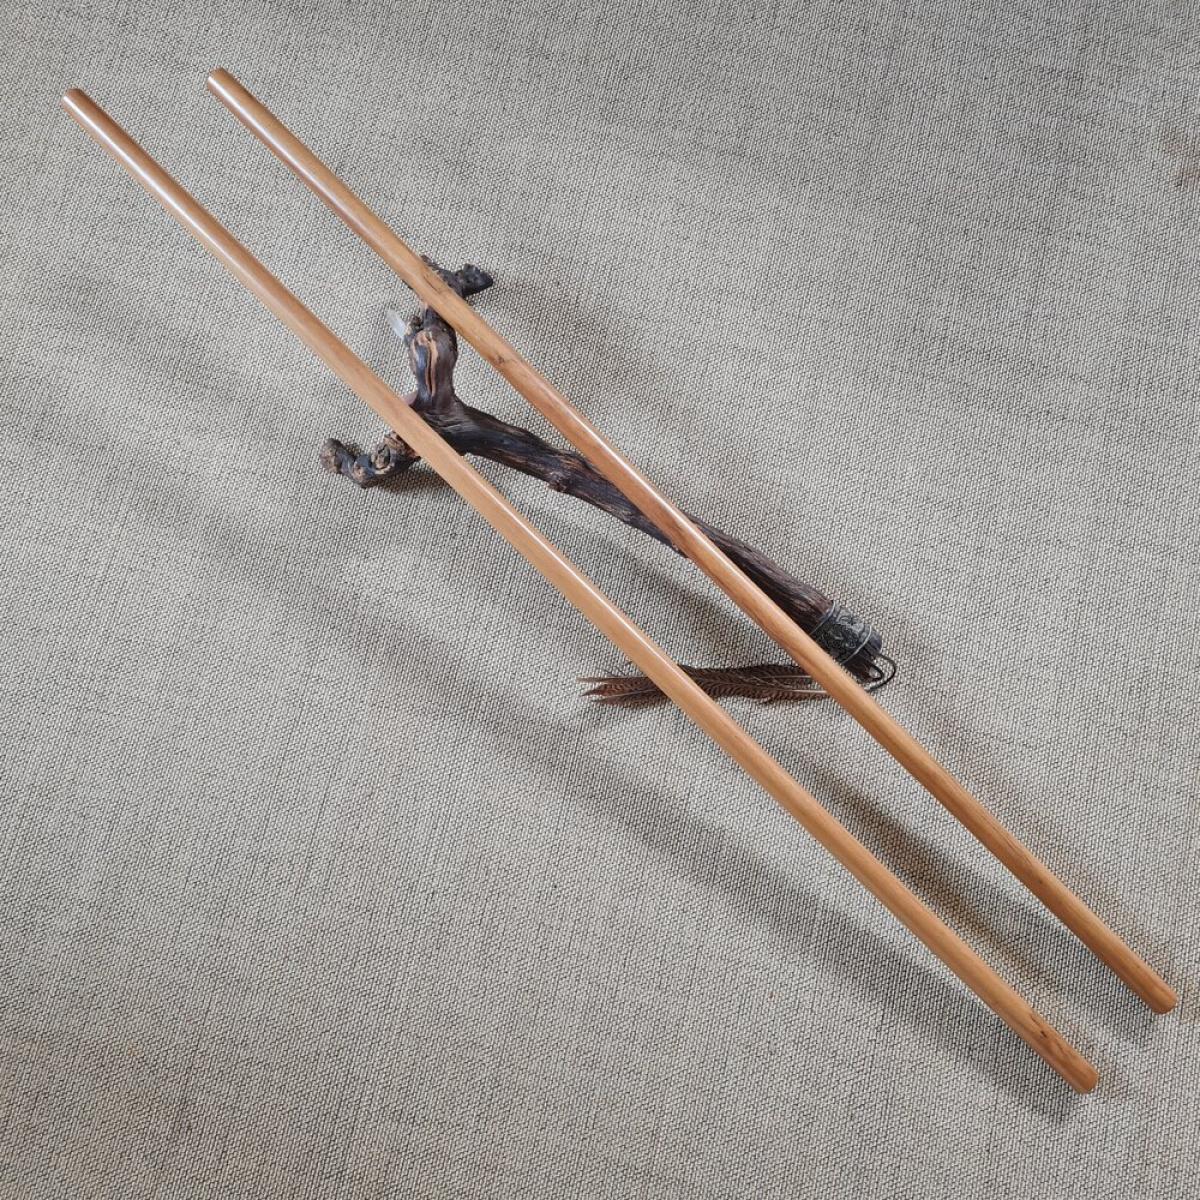 Jo-Stab aus Supa-Holz - Länge 128 cm ➤ www.bokken-shop.de. Passend für Aikido, Iaido, Jo-Jutsu, Jodo, Bujinkan. Dein Budo-Fachhändler!